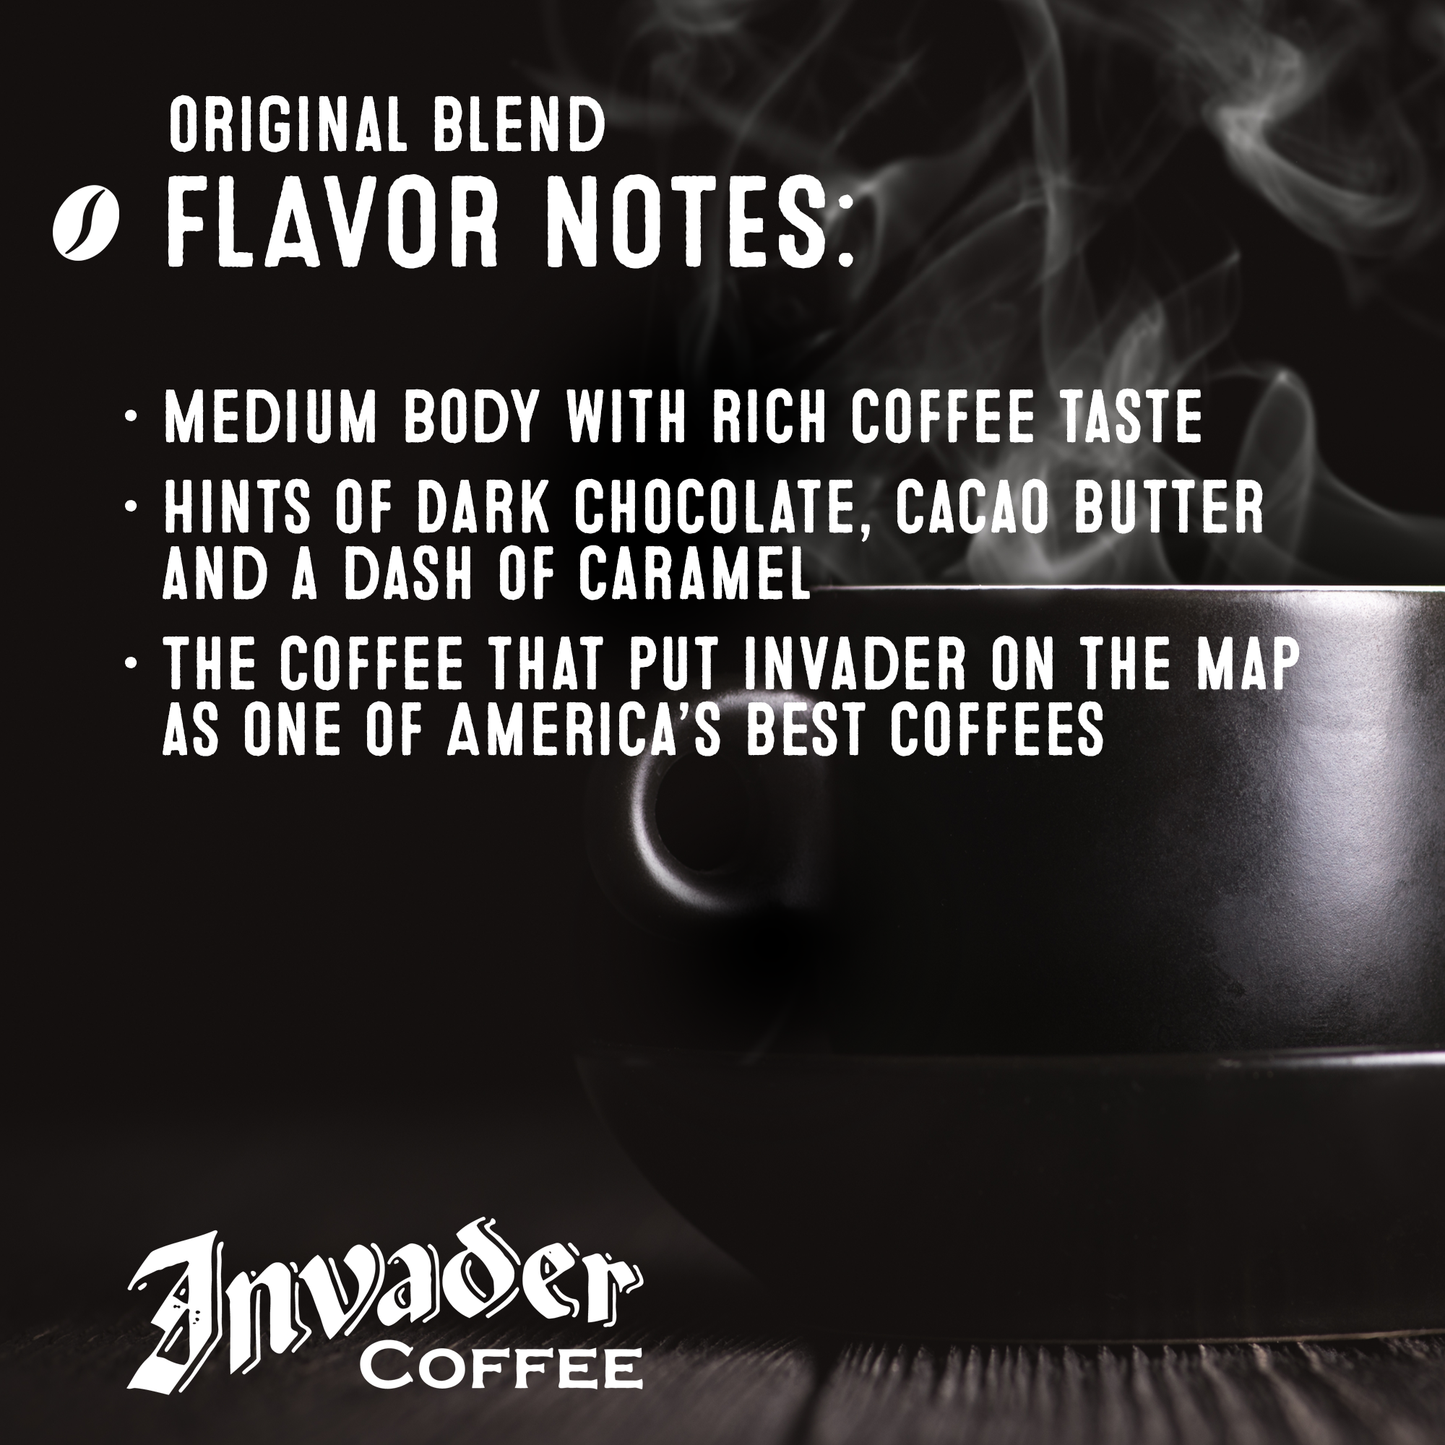 Invader Coffee- The Original Blend